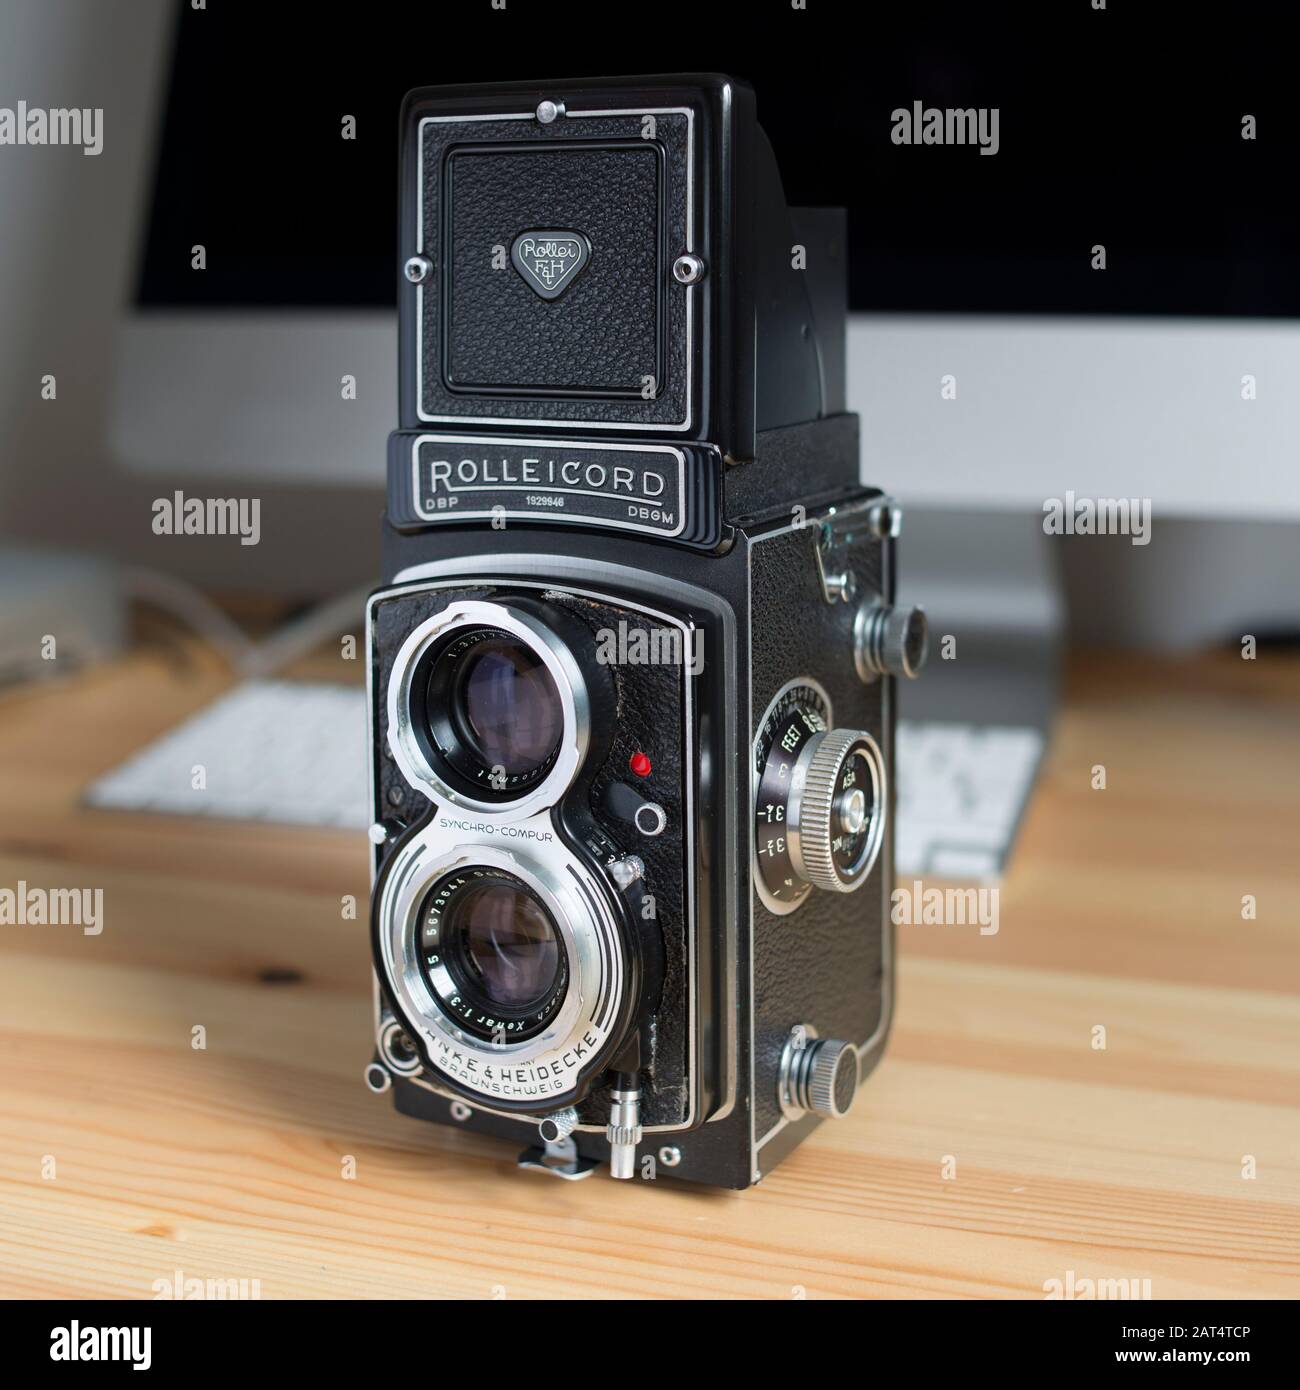 Rolleicord Twin Lens Reflex camera Stock Photo - Alamy